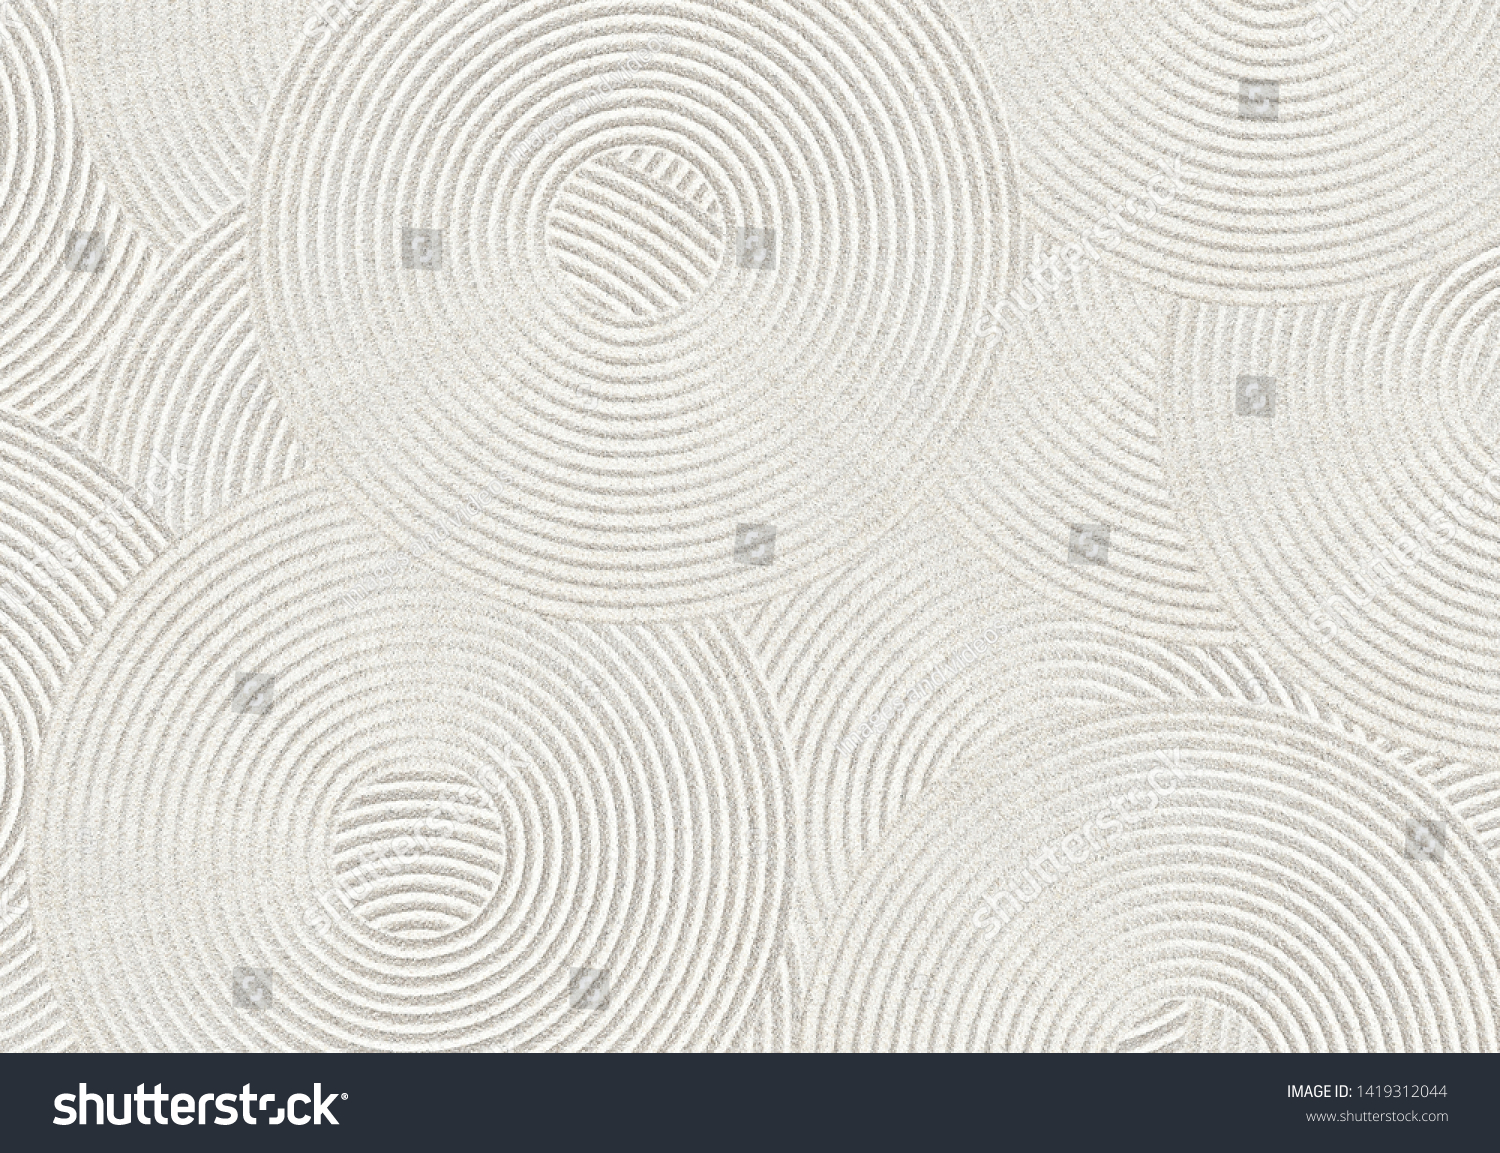 Zen circle pattern in sand #1419312044